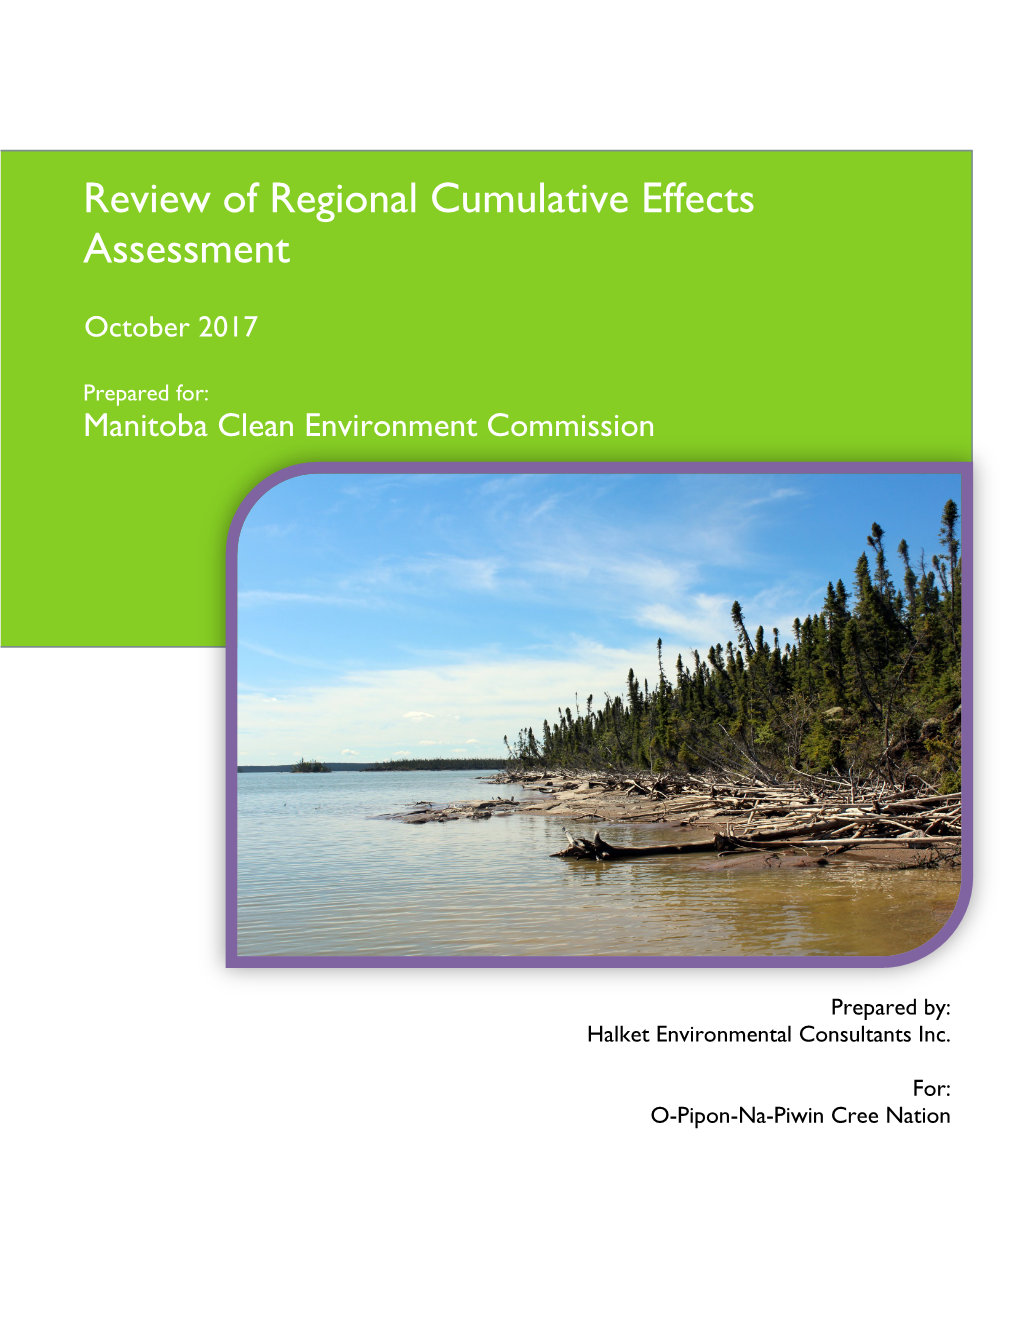 Review of Regional Cumulative Effects Assessment